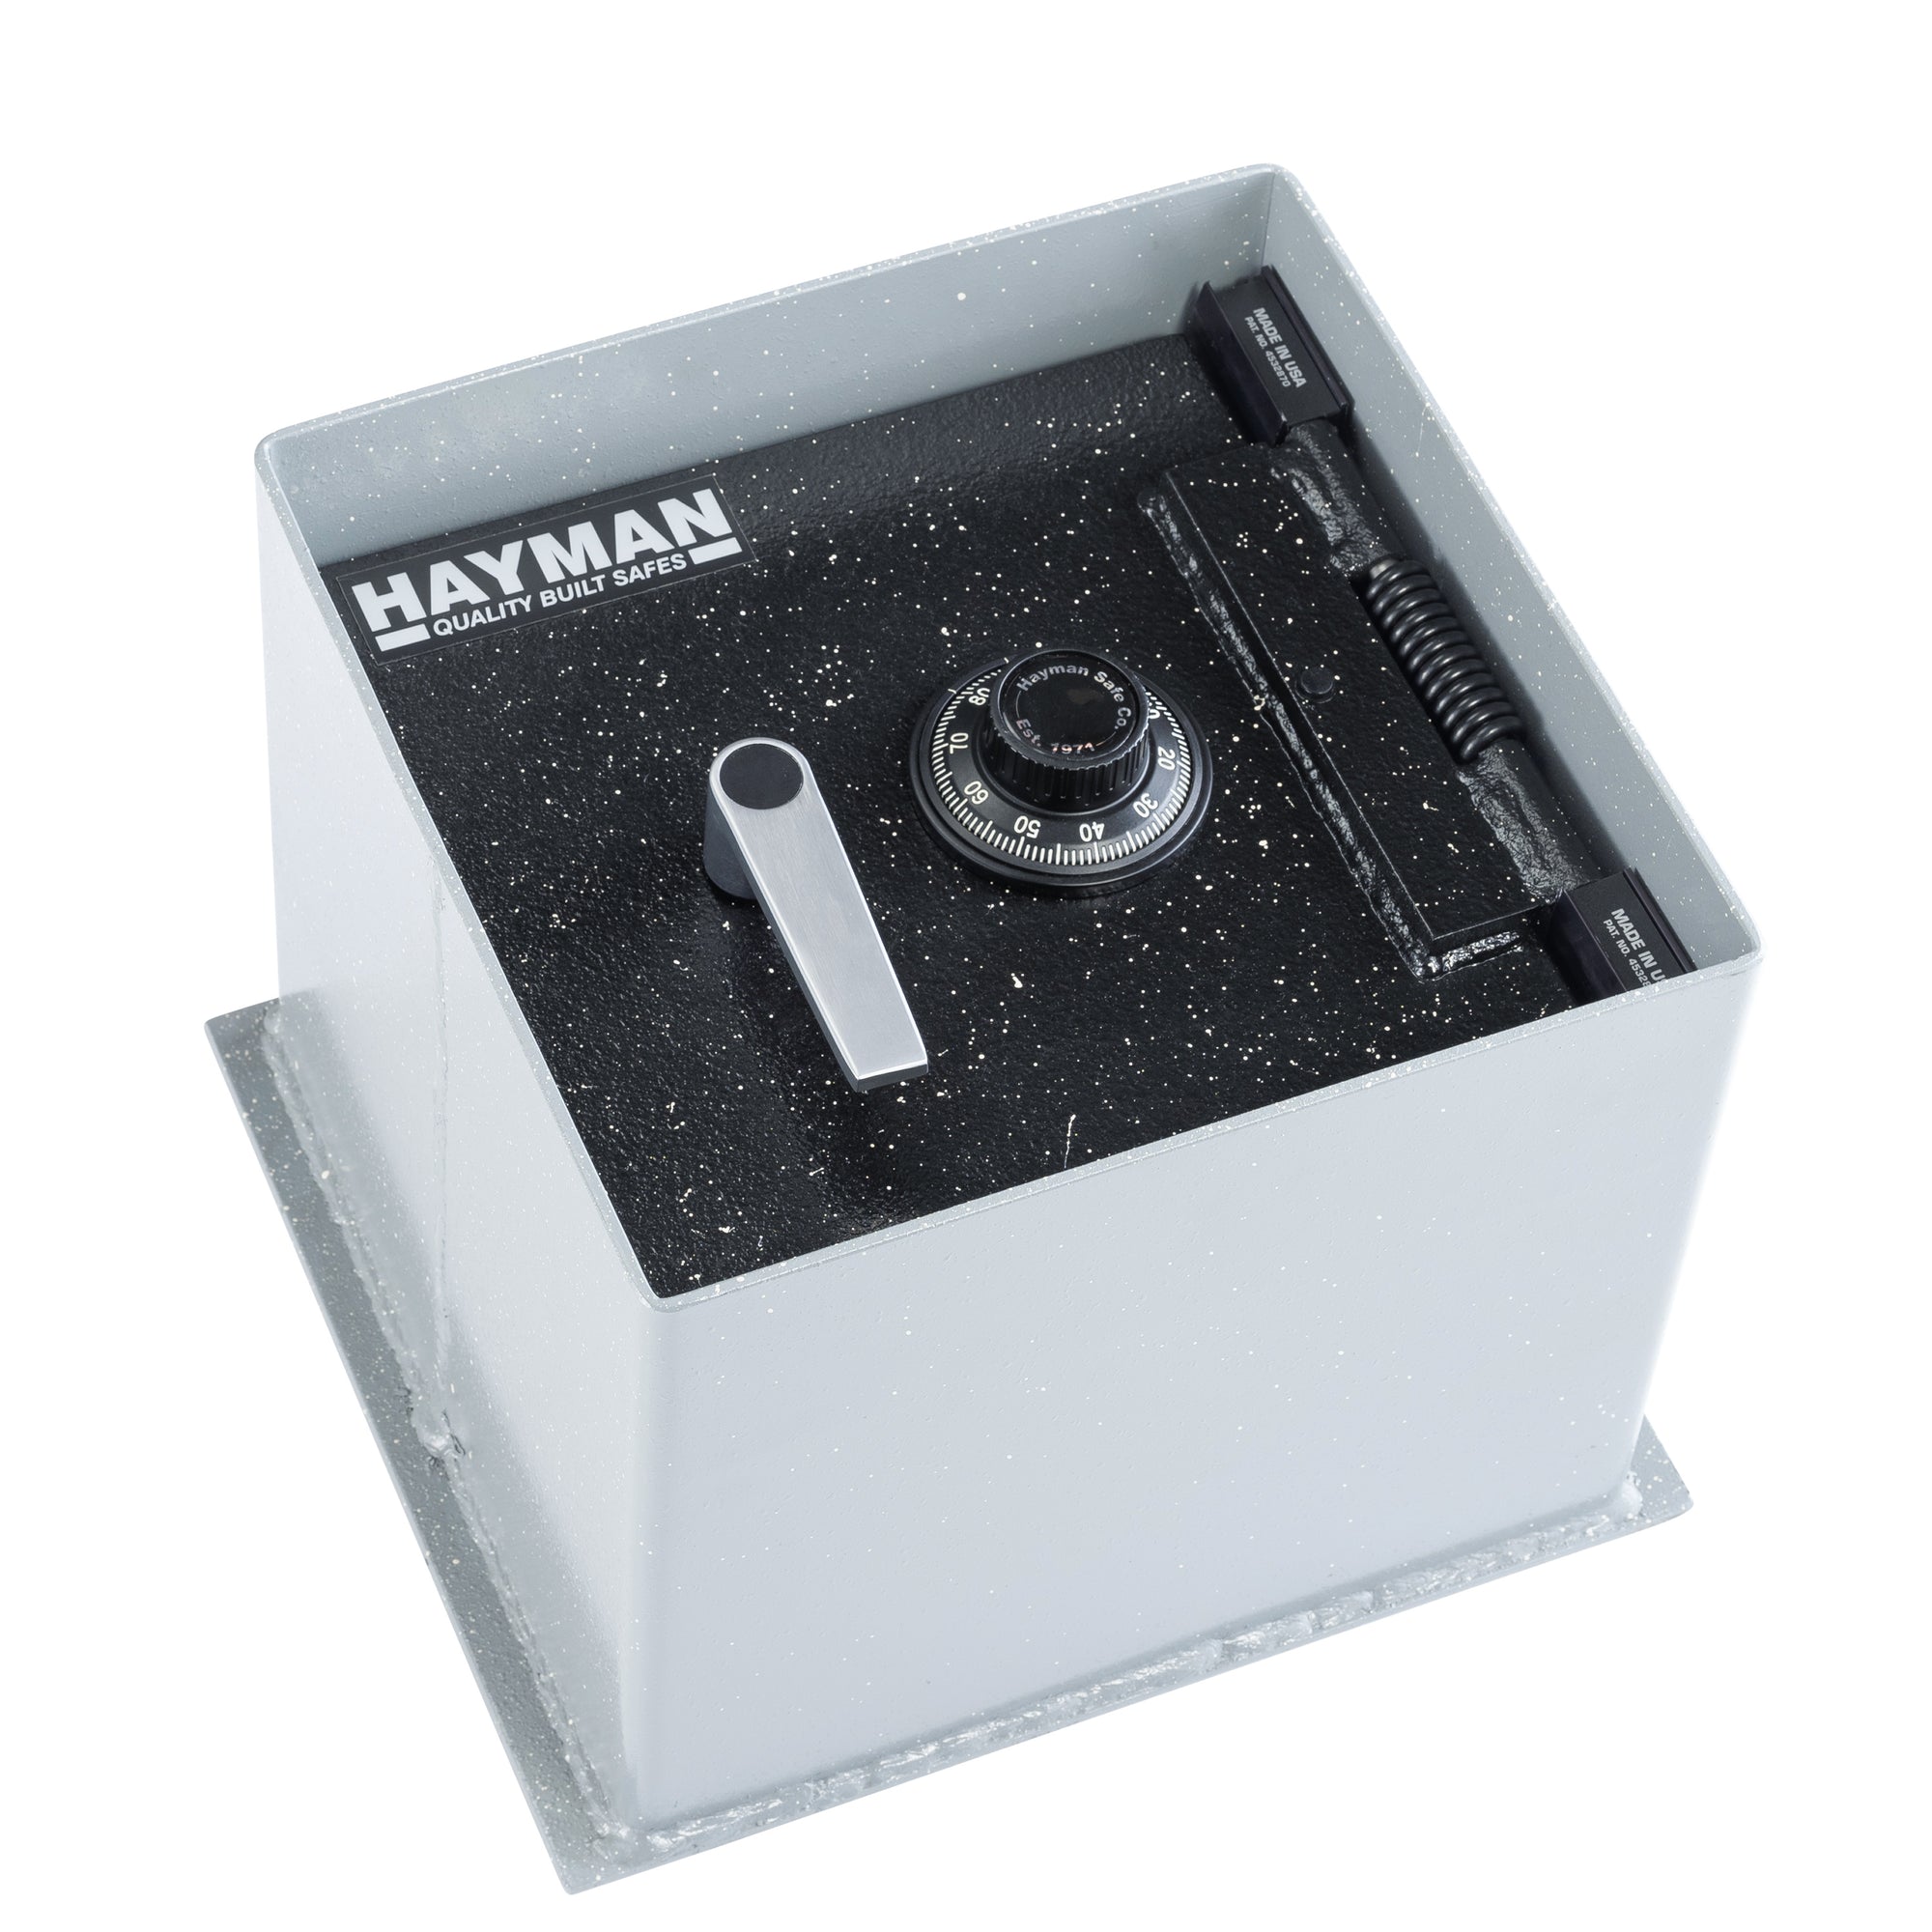 Hayman FS8 Steel Body Floor Safe